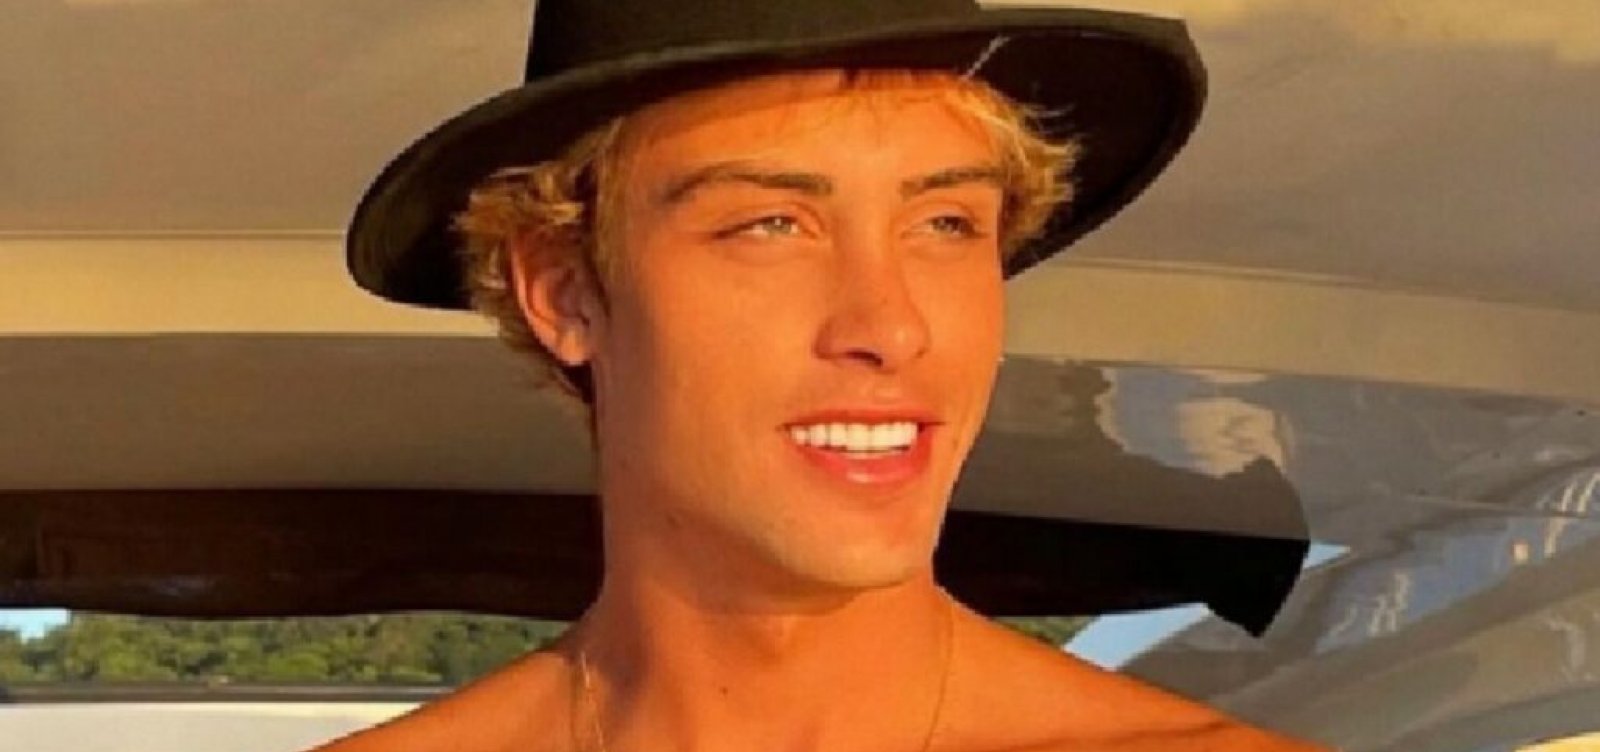 Modelo Bruno Krupp deixa hospital e vai para presídio por morte de adolescente